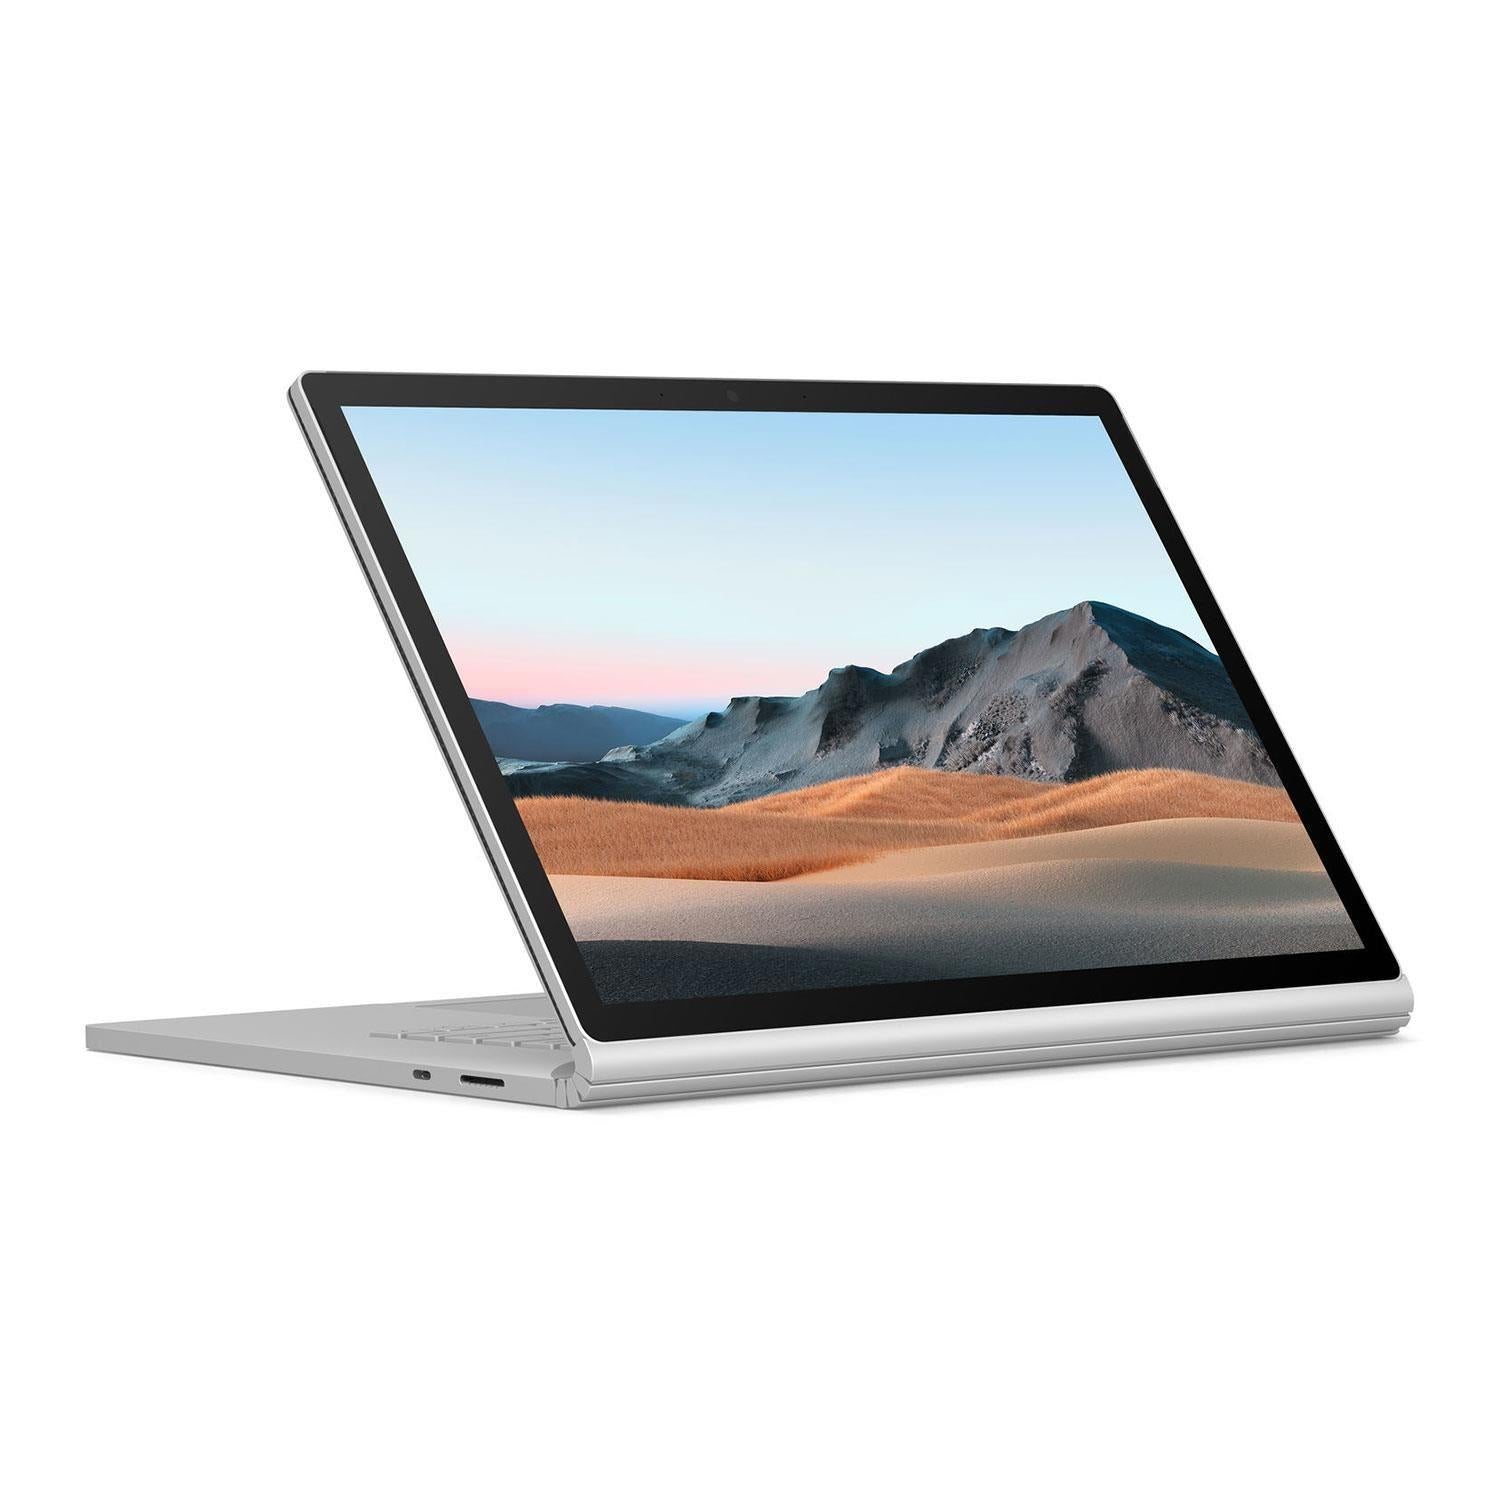 Microsoft Surface Book 3 13.5" i7-1065G7 256GB 16GB Touchscreen Windows Laptop B